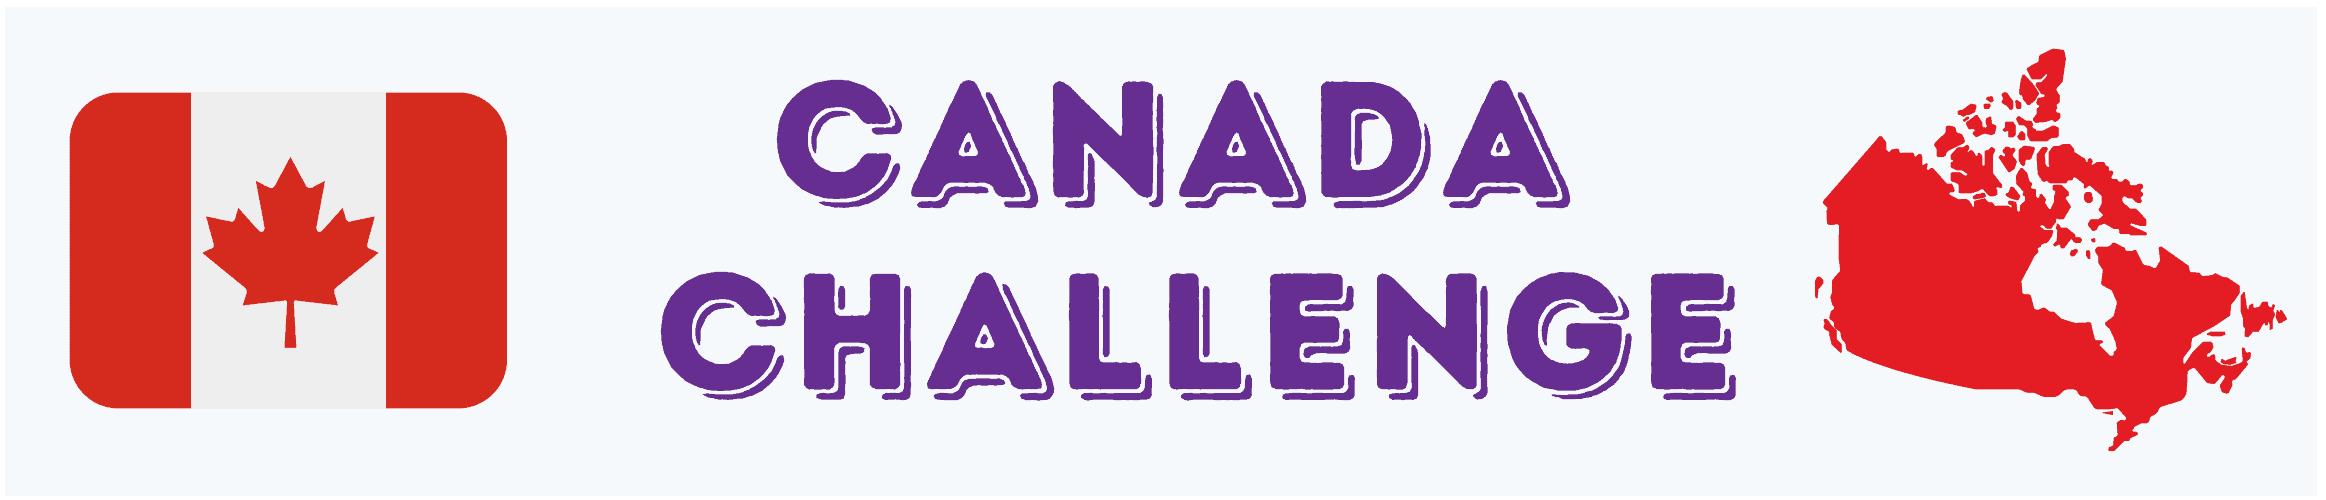 Canada Challenge